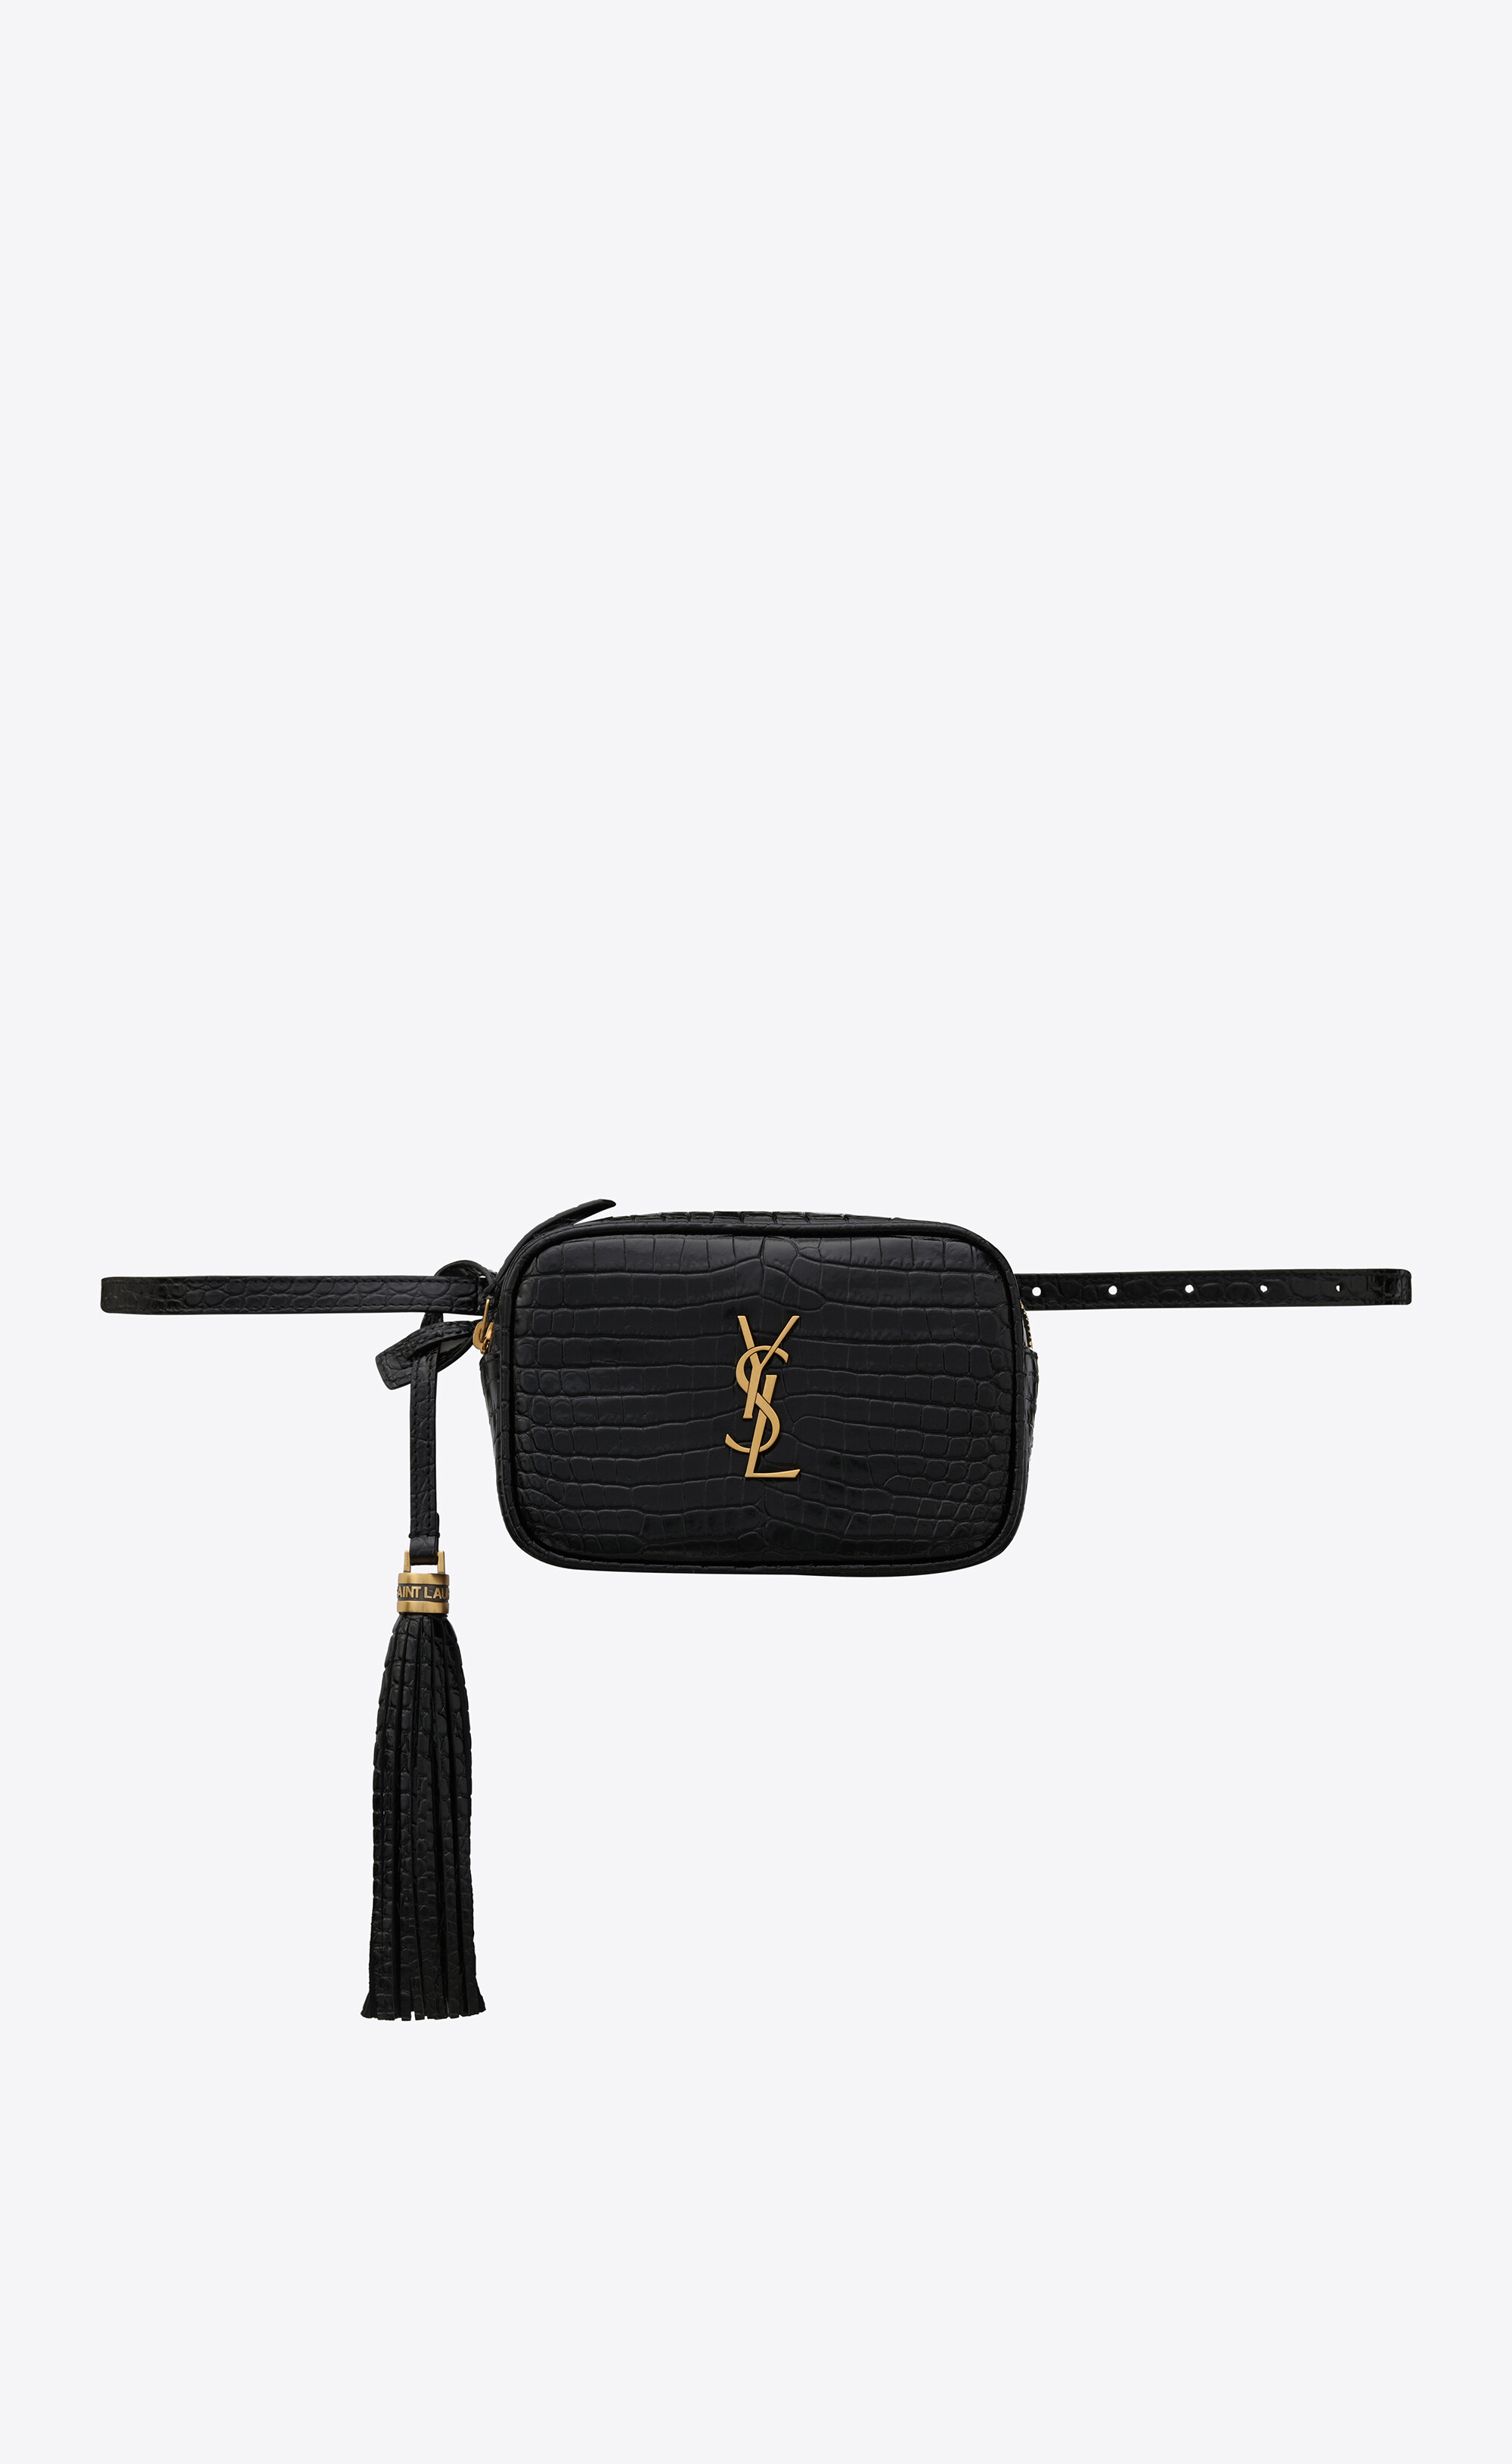 Yves Saint Laurent Black Crocodile Embossed Leather Lunch Box Bag